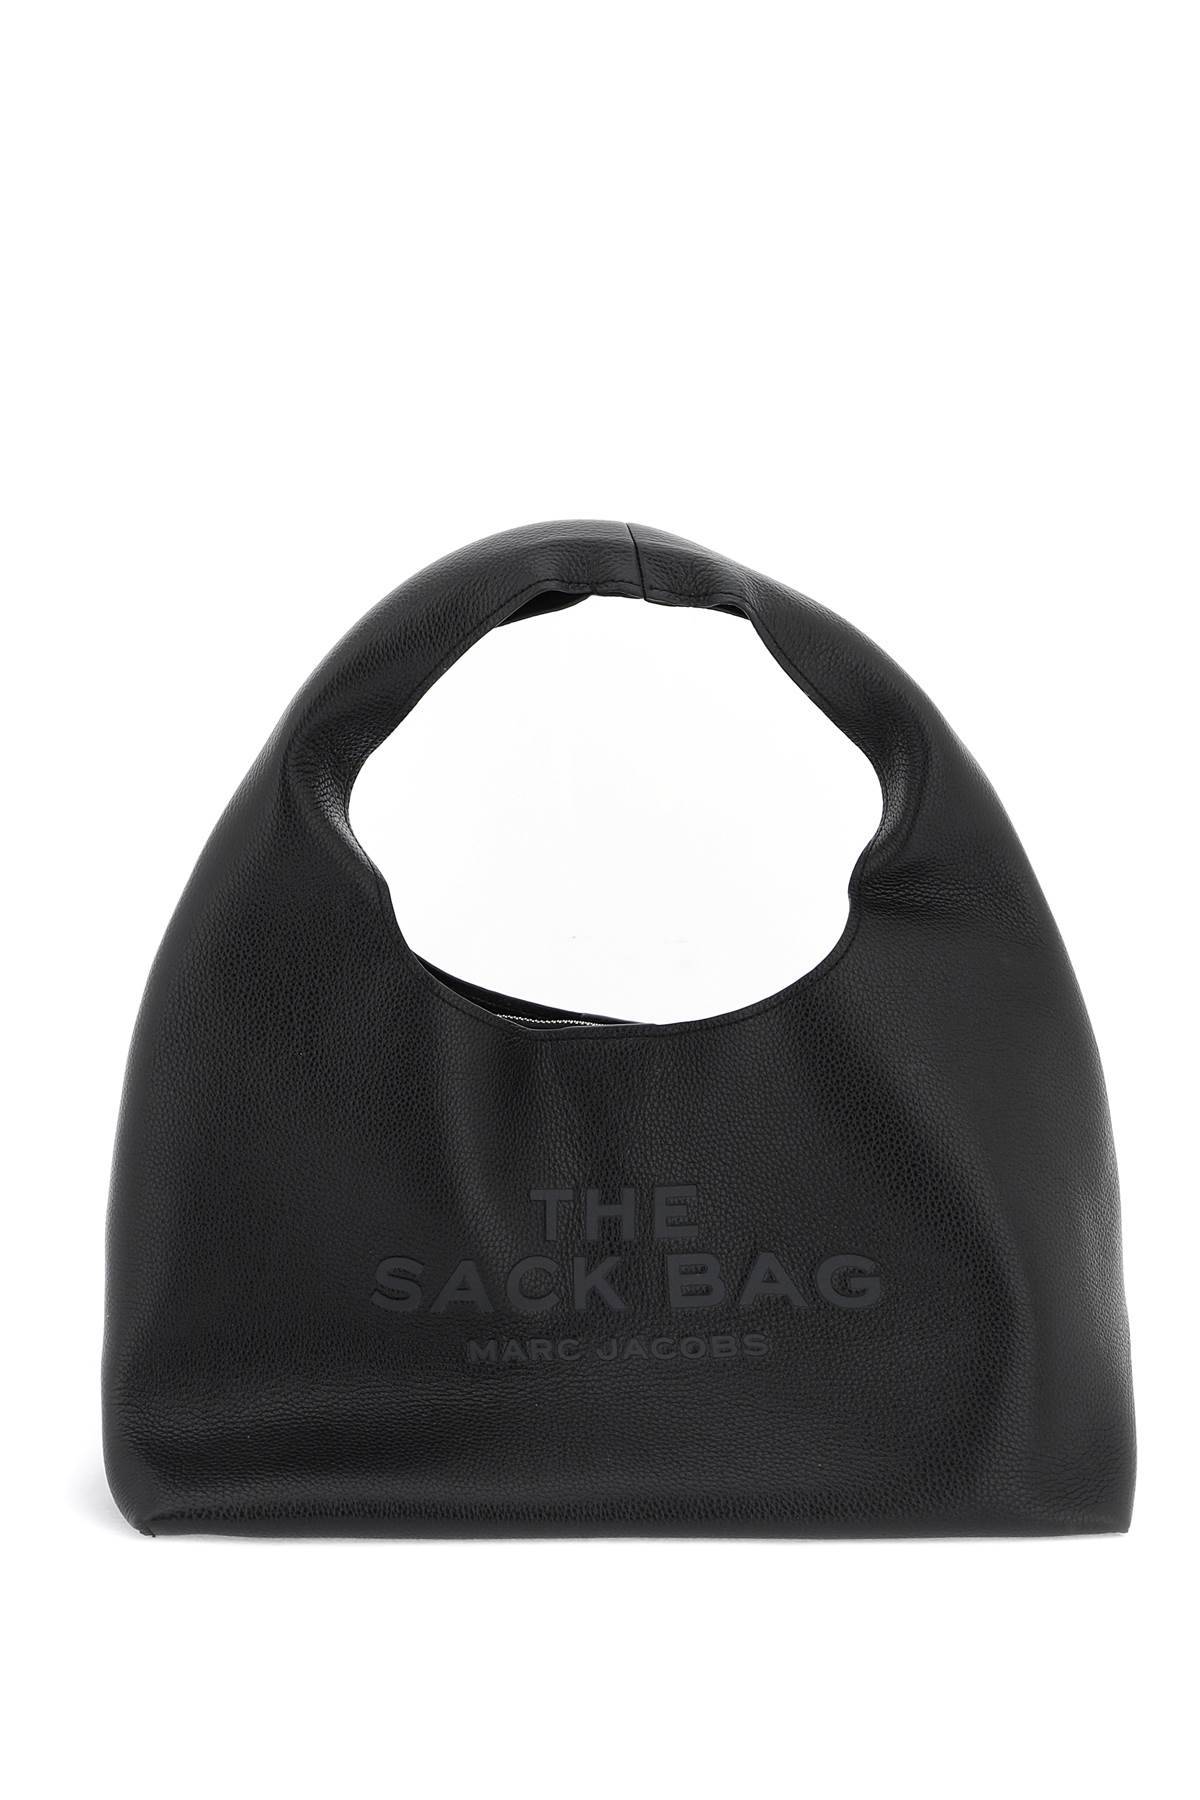 Marc Jacobs MARC JACOBS the sack bag